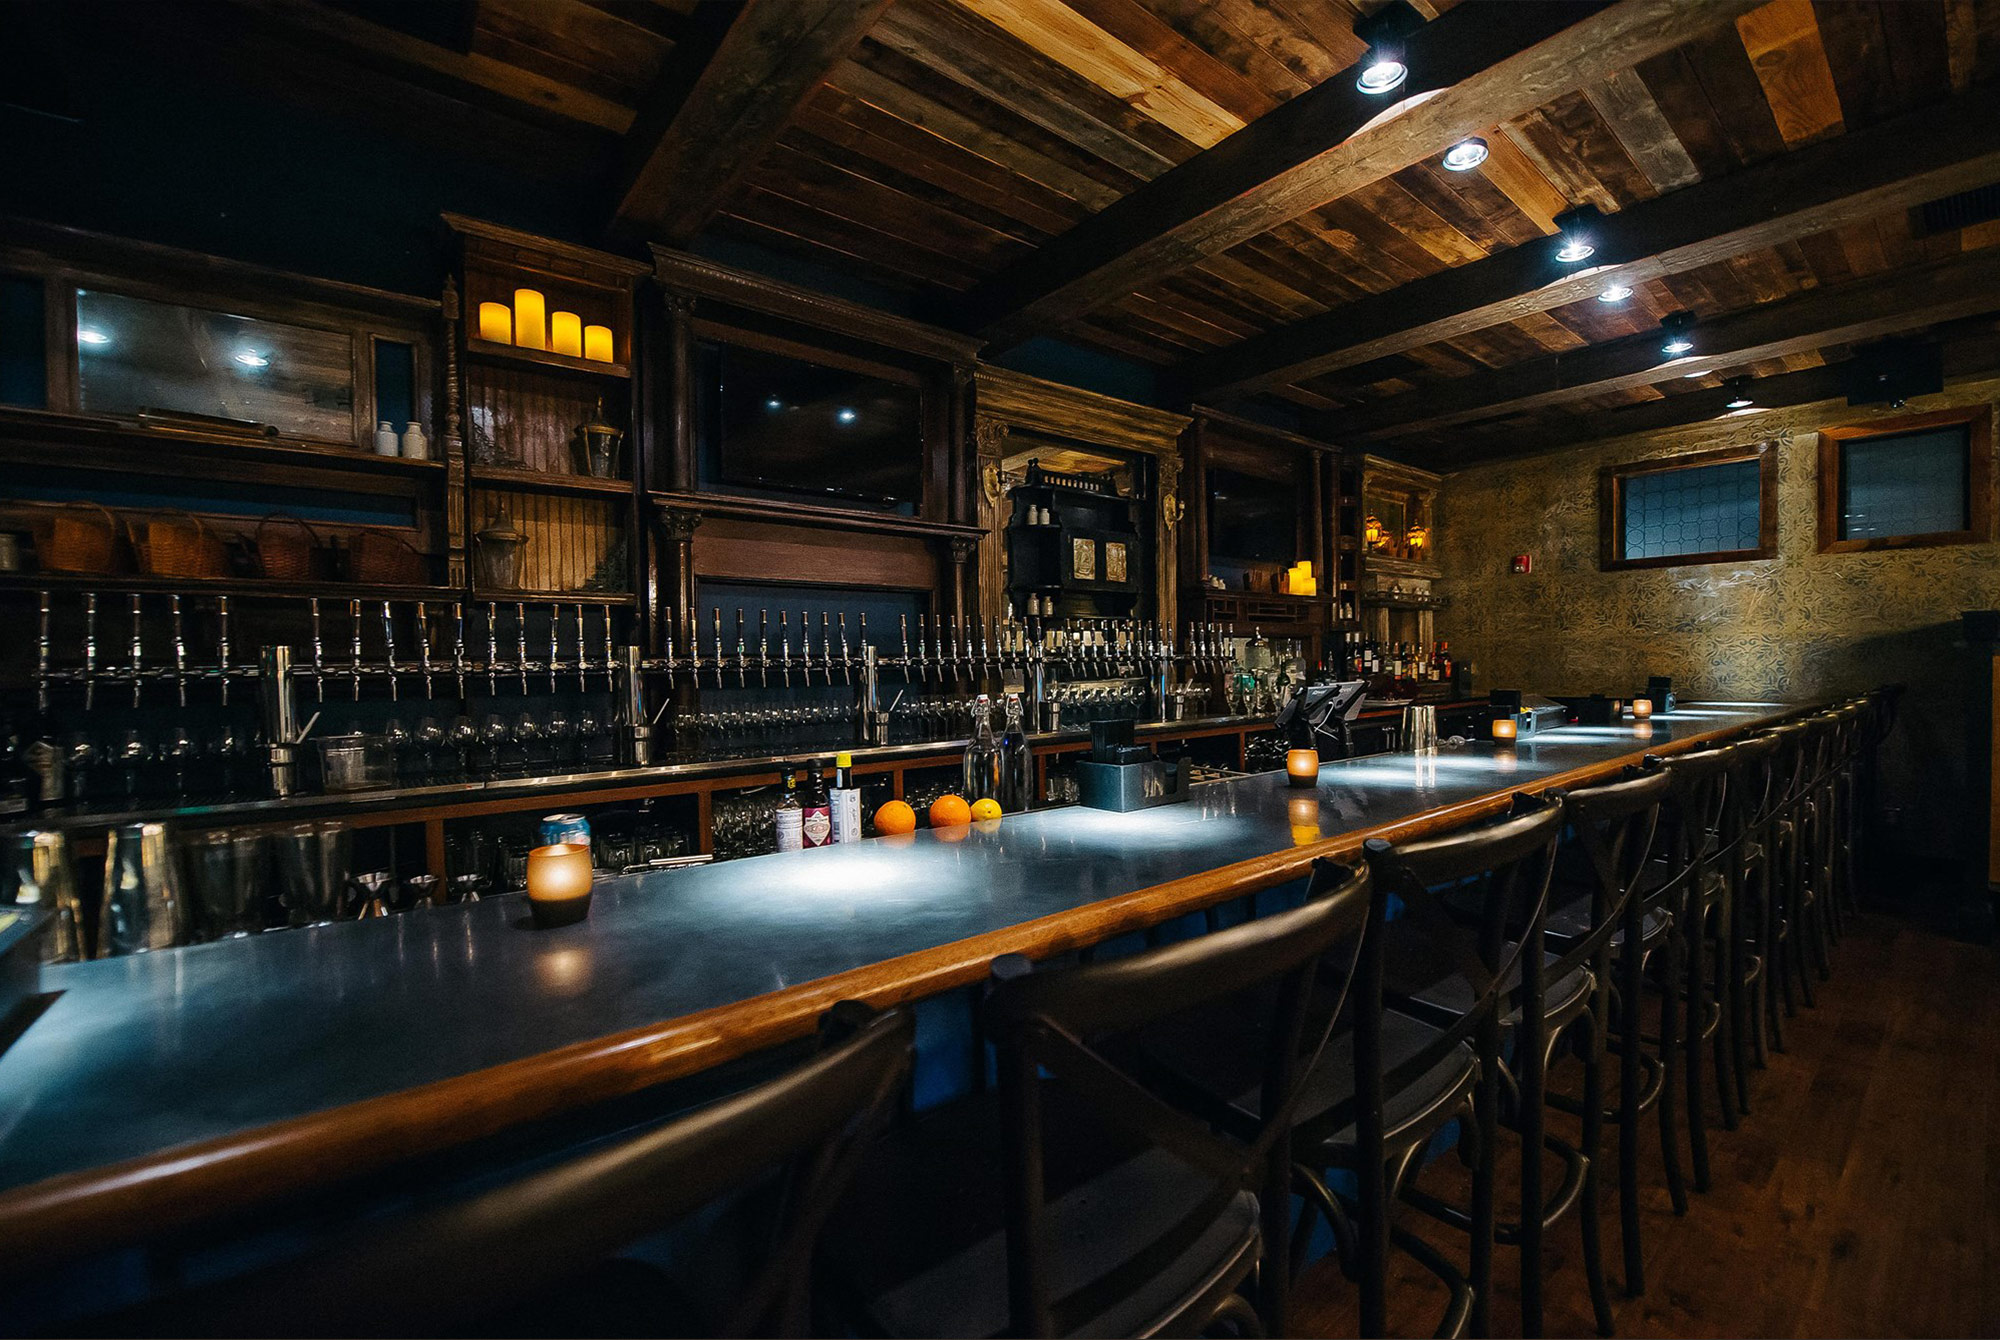 The Best Beer Bars in Washington, D.C.